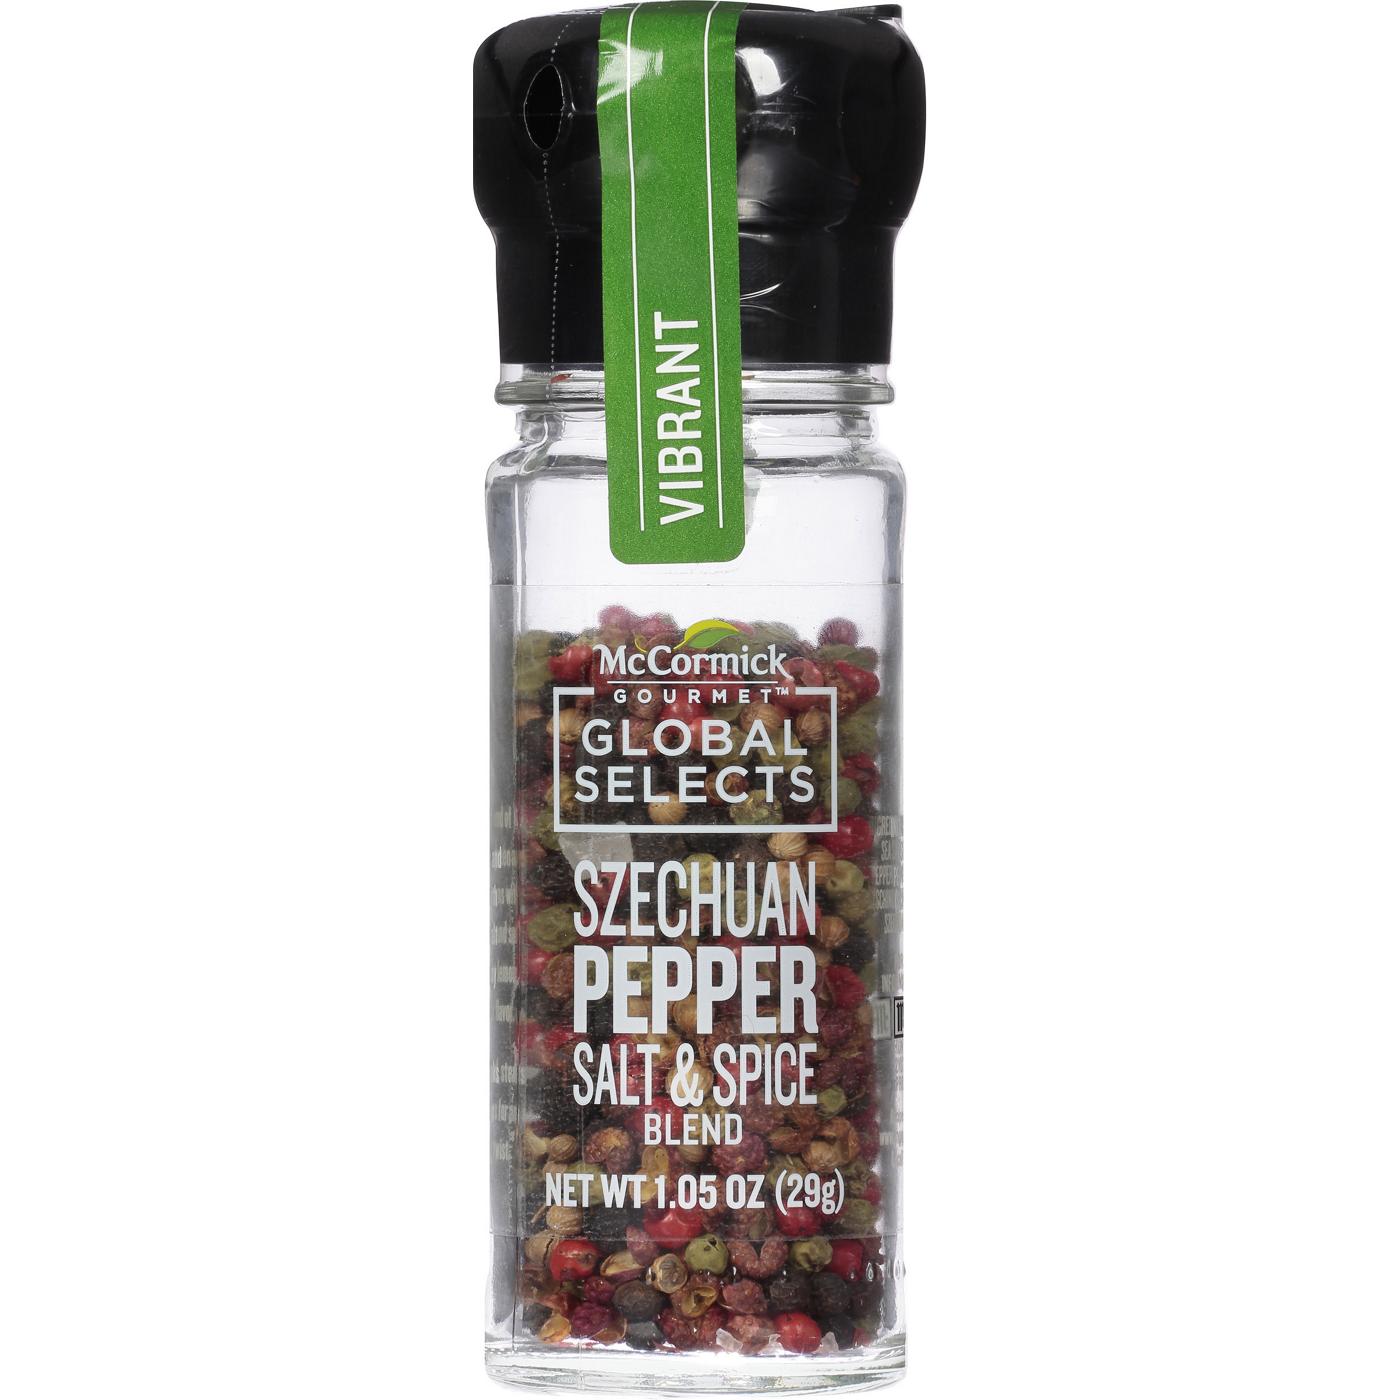 McCormick Gourmet Global Selects Szechuan Pepper Salt & Spice Blend; image 1 of 7